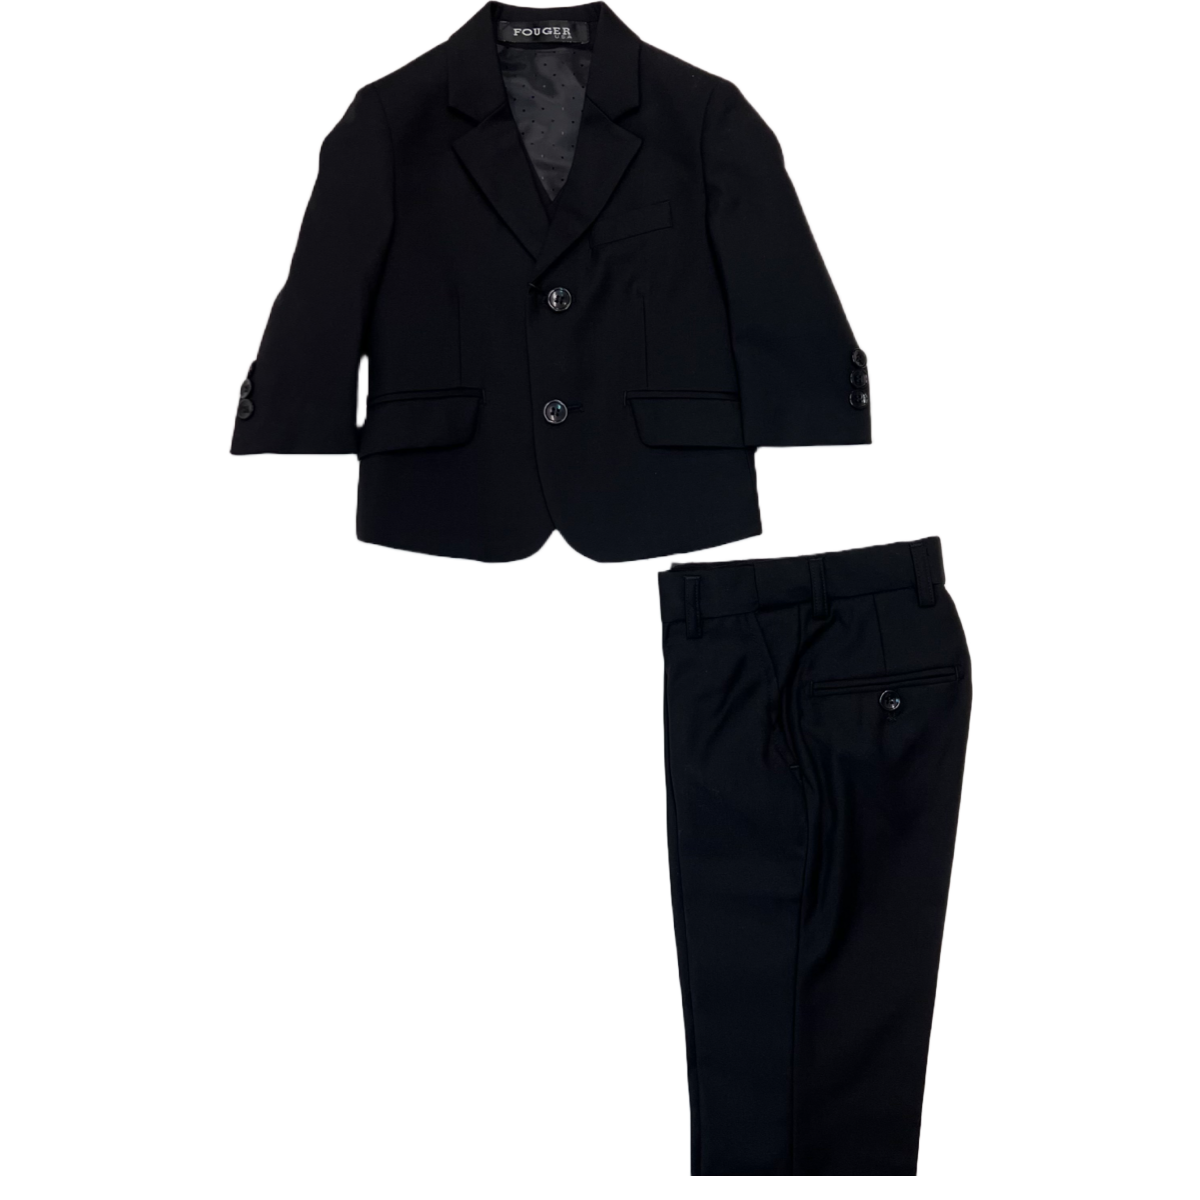 Fouger U.S.A. Slim/Modern Fit 3-Piece Baby Black Suit